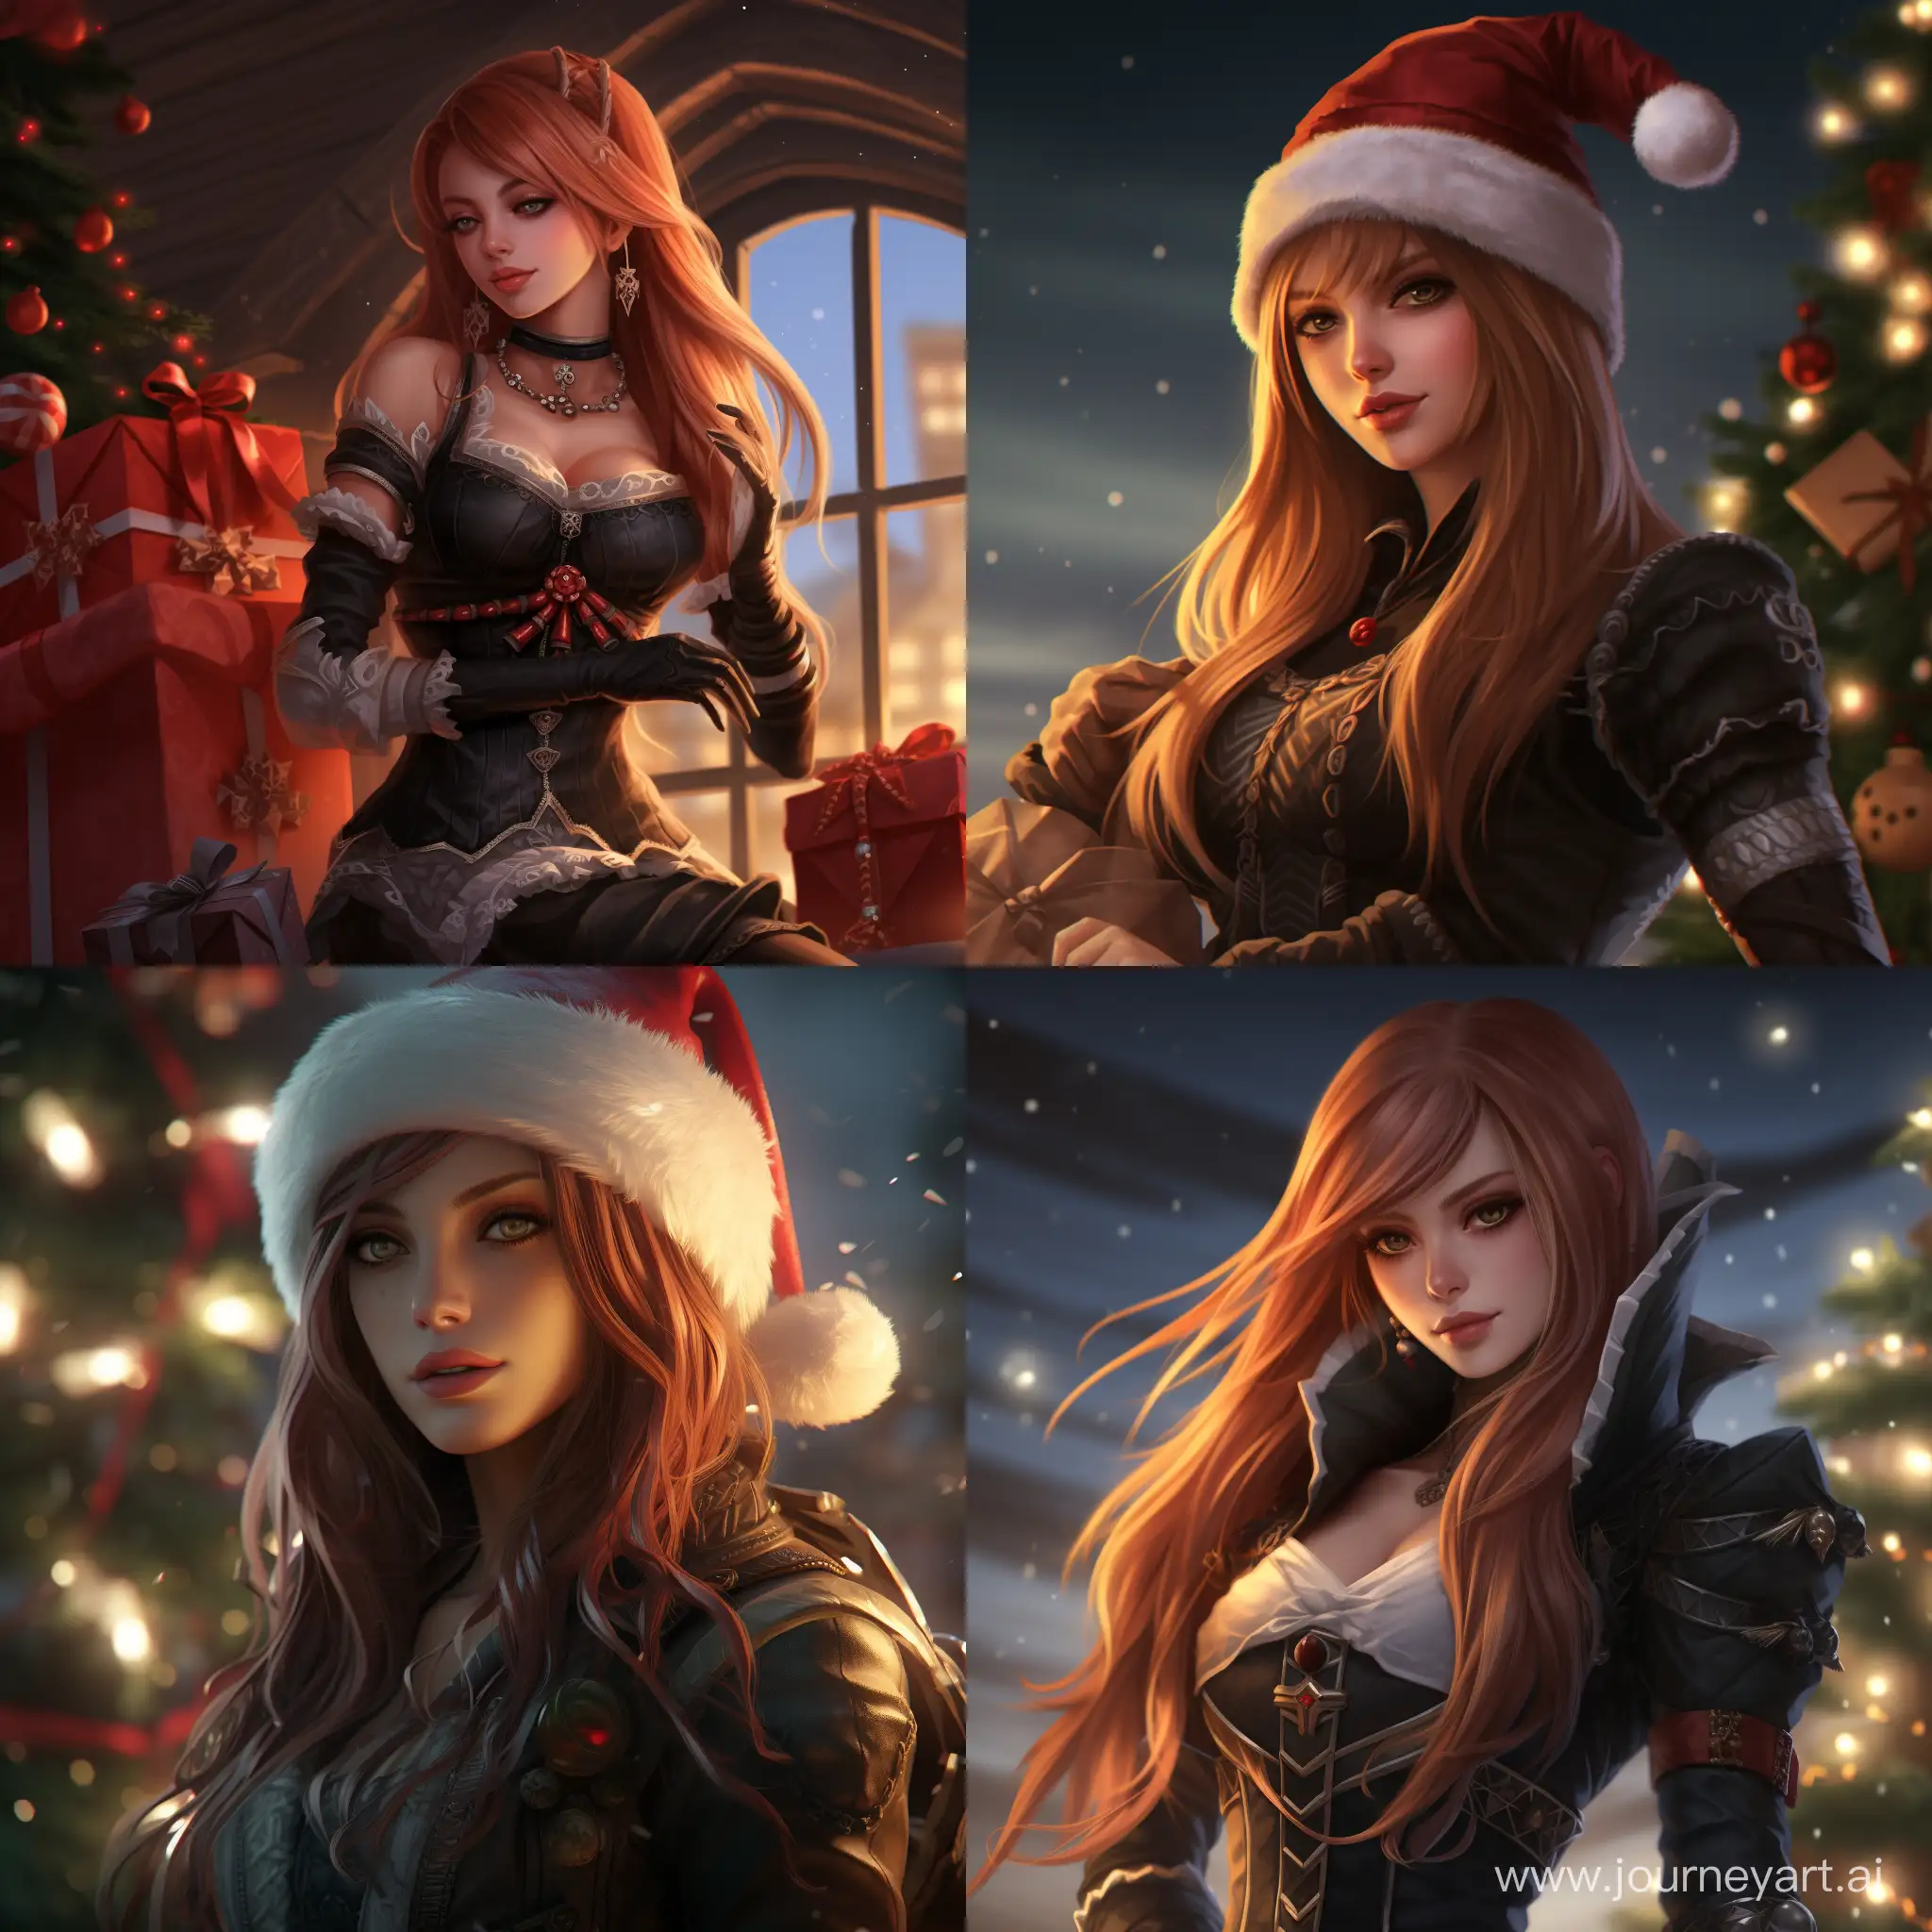 Christmas-Katarina-Festive-League-of-Legends-Art-with-11-Aspect-Ratio